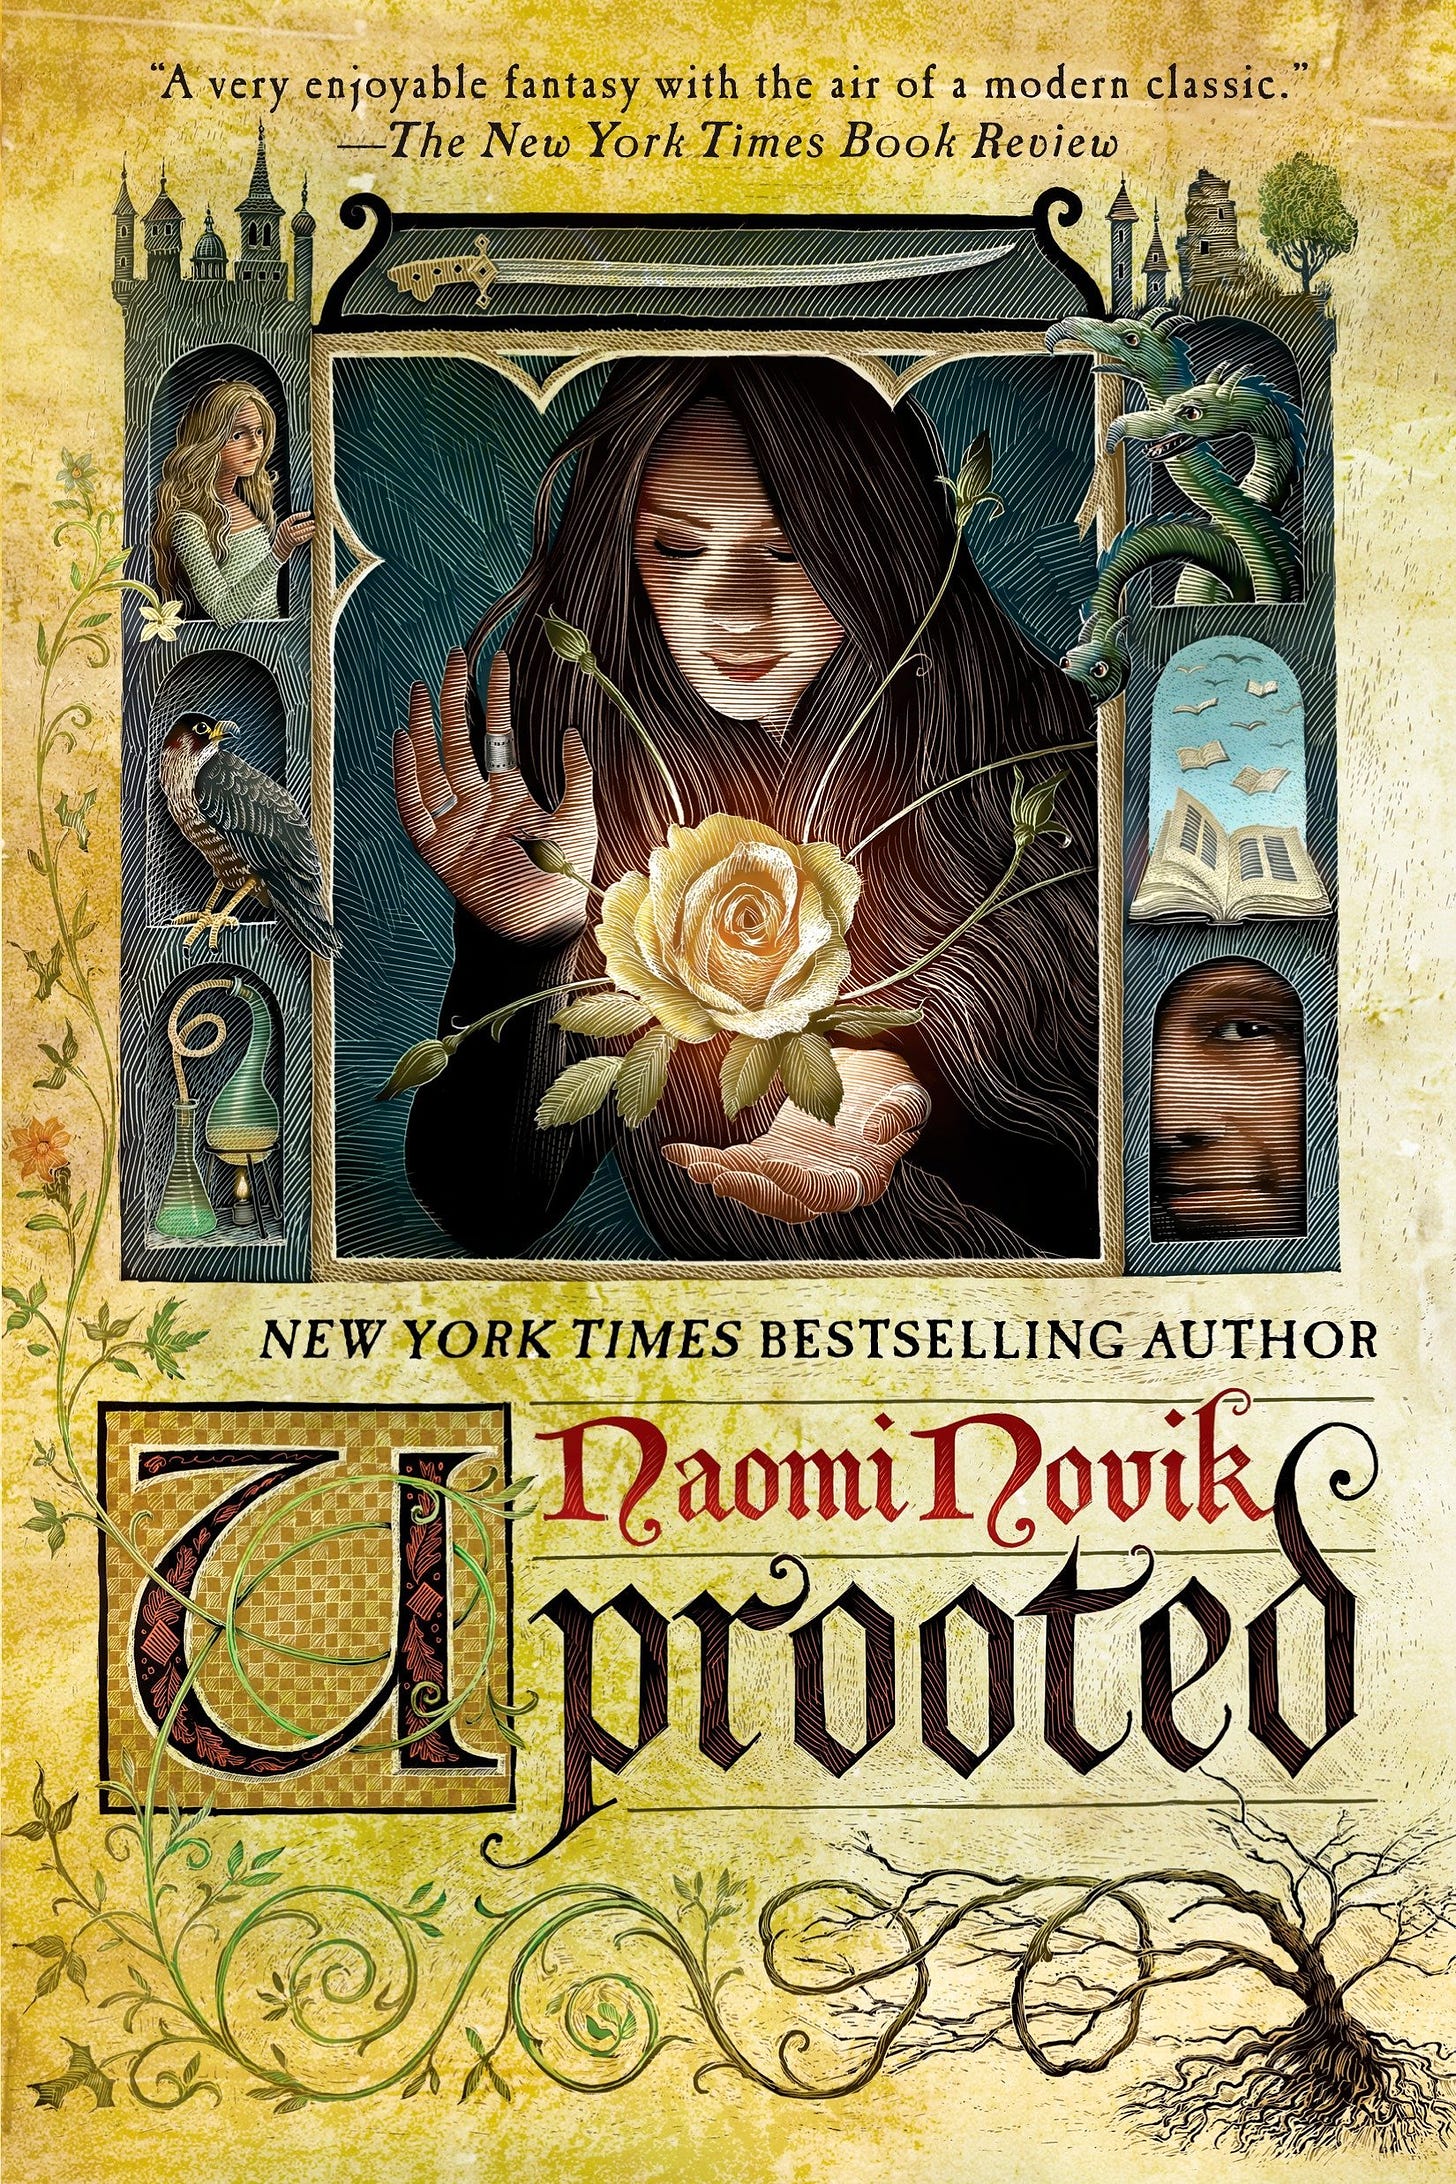 Uprooted: A Novel: Novik, Naomi: 9780804179058: Amazon.com: Books